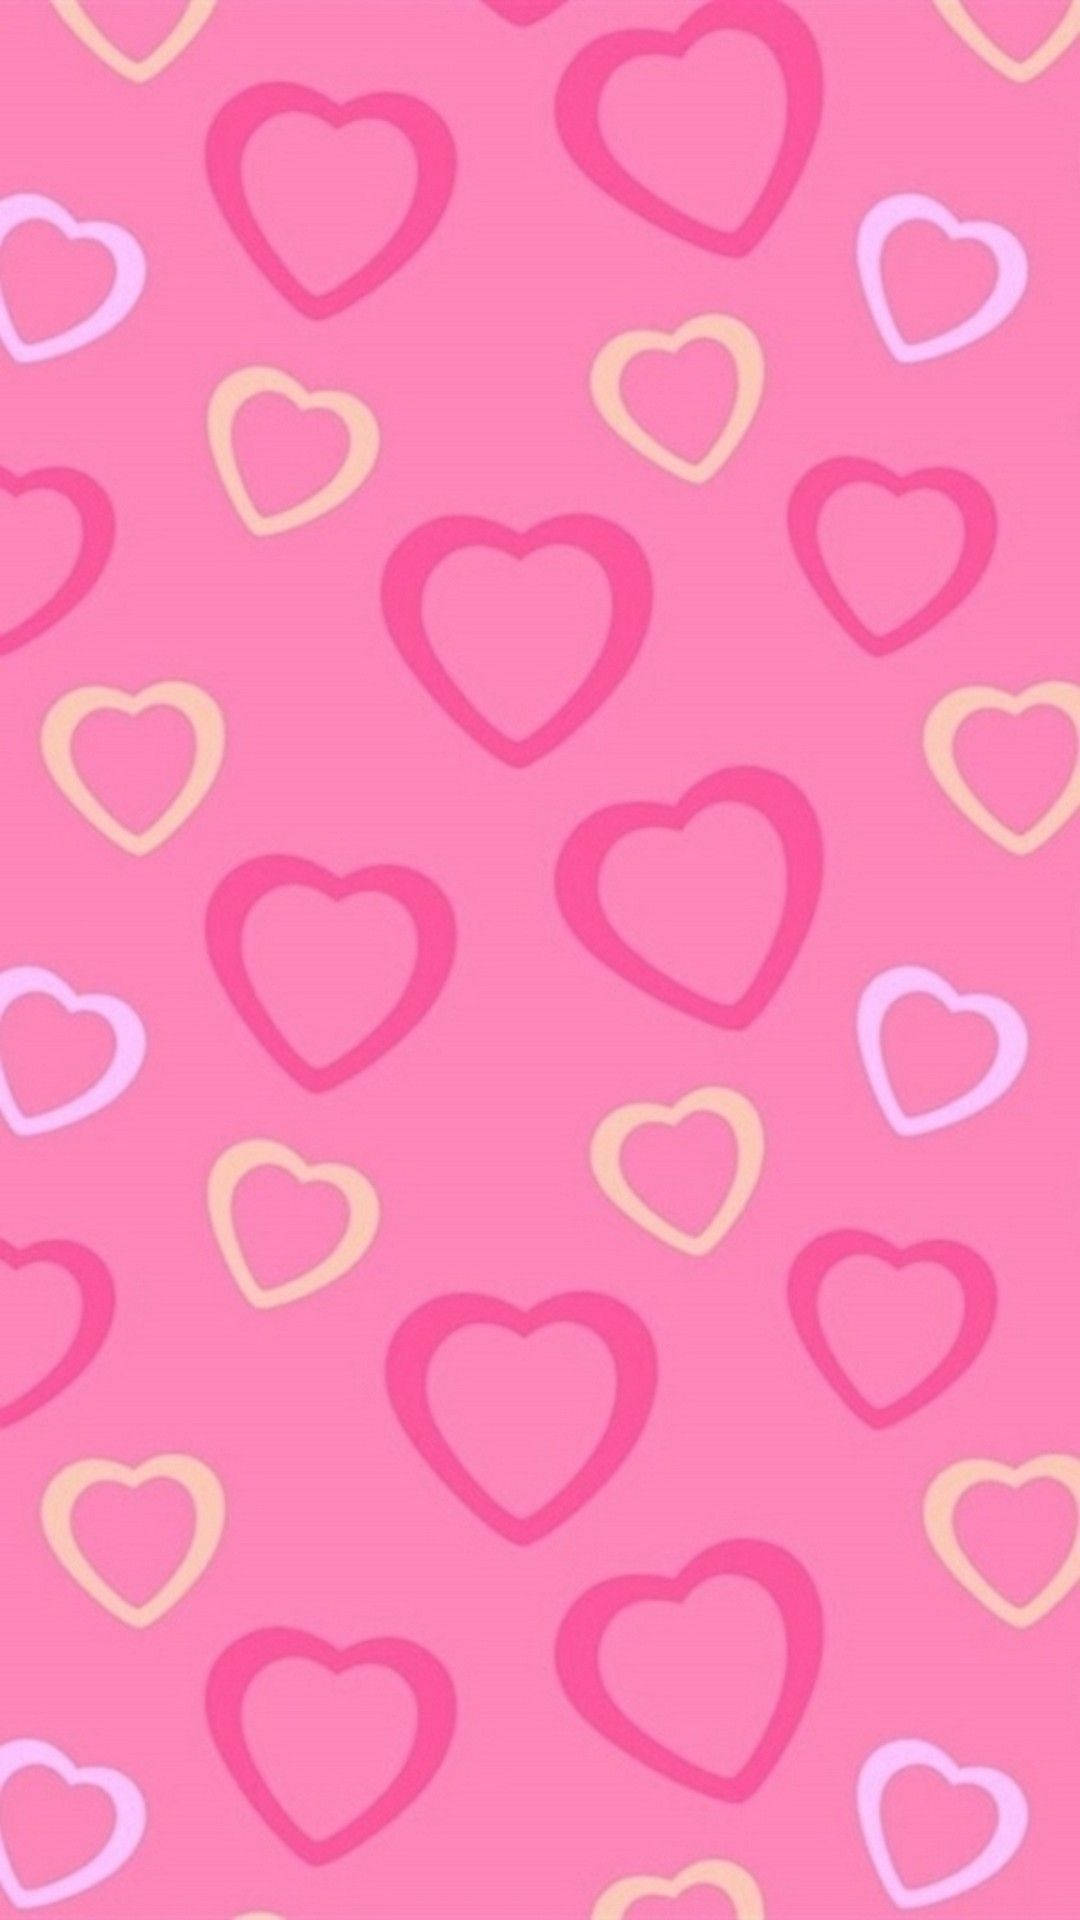 Cute Girly Hearts Wallpaper